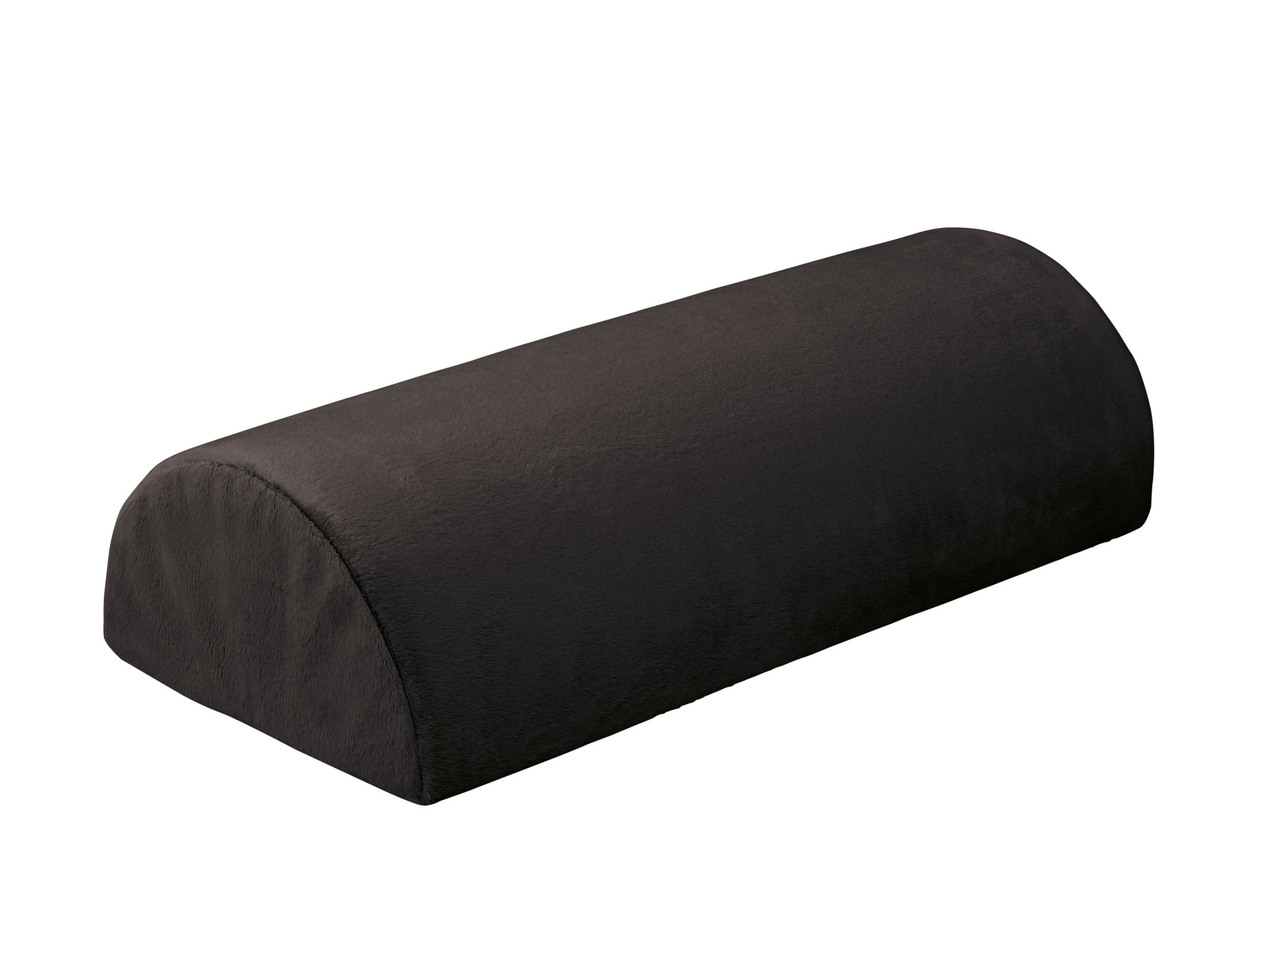 Half Roll Cushion or Neck Support Cushion